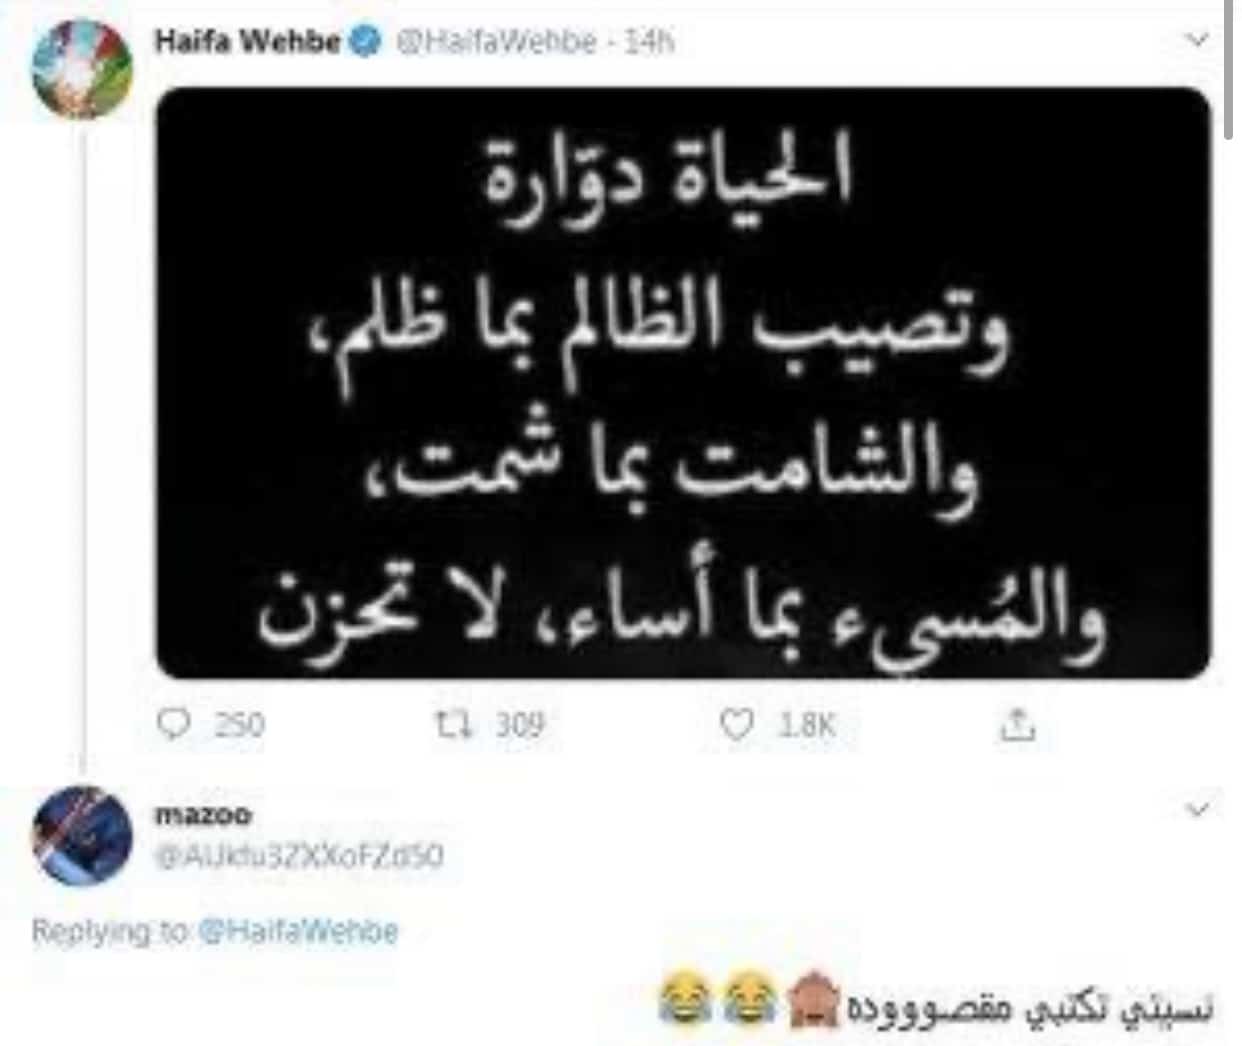 Haifa Wehbe je likovala zbog skandala Ahmed Abu Hashima